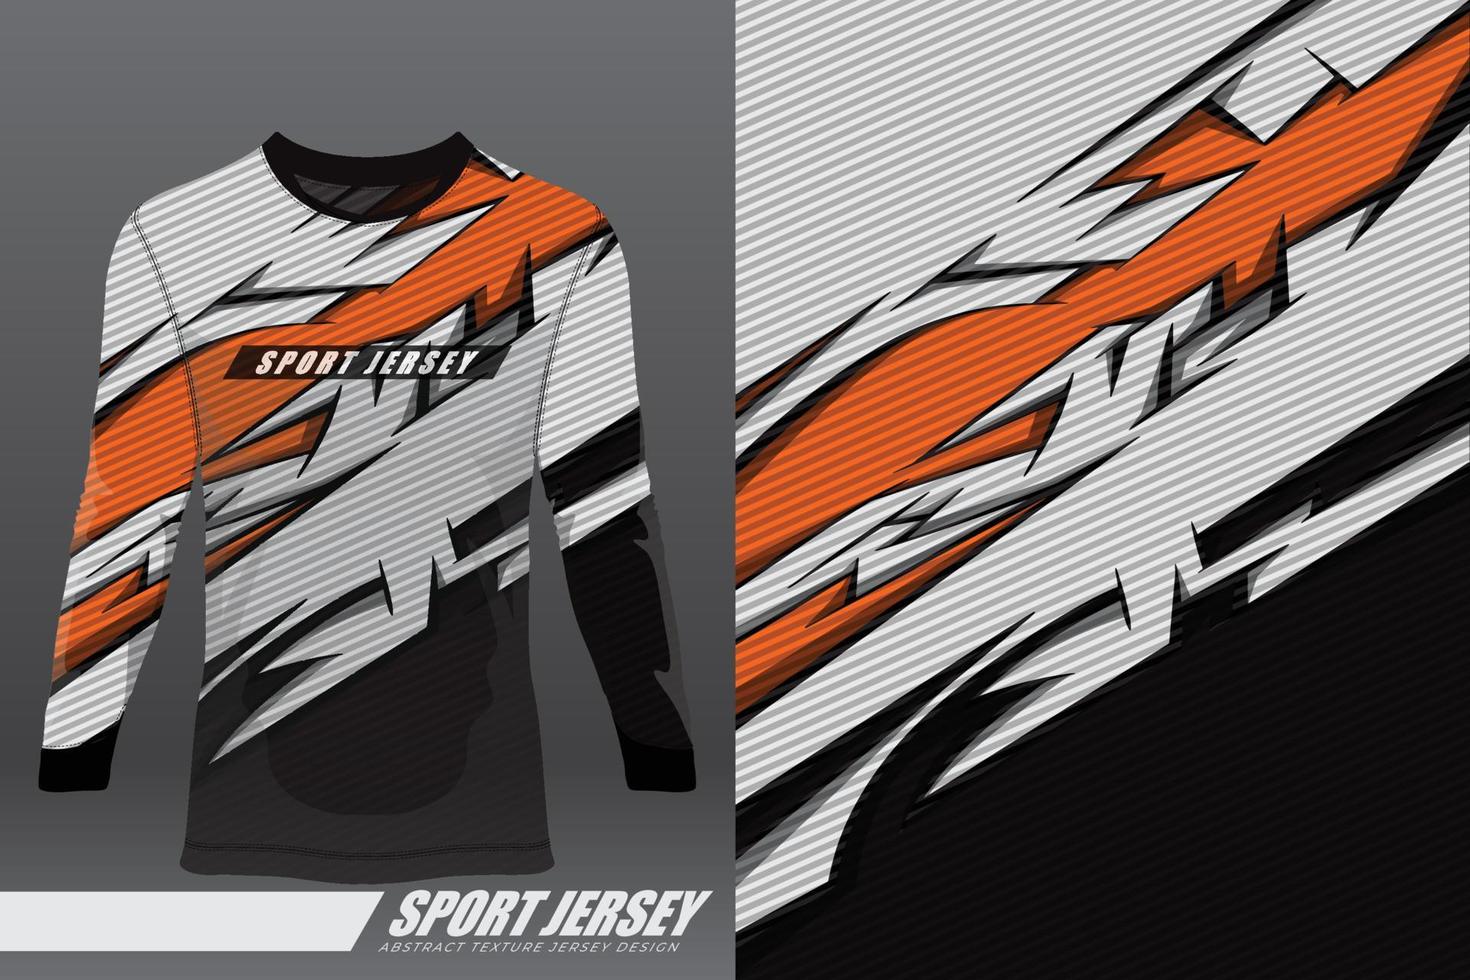 Tshirt sports design for racing, jersey, cycling, football, gaming, motocross vector